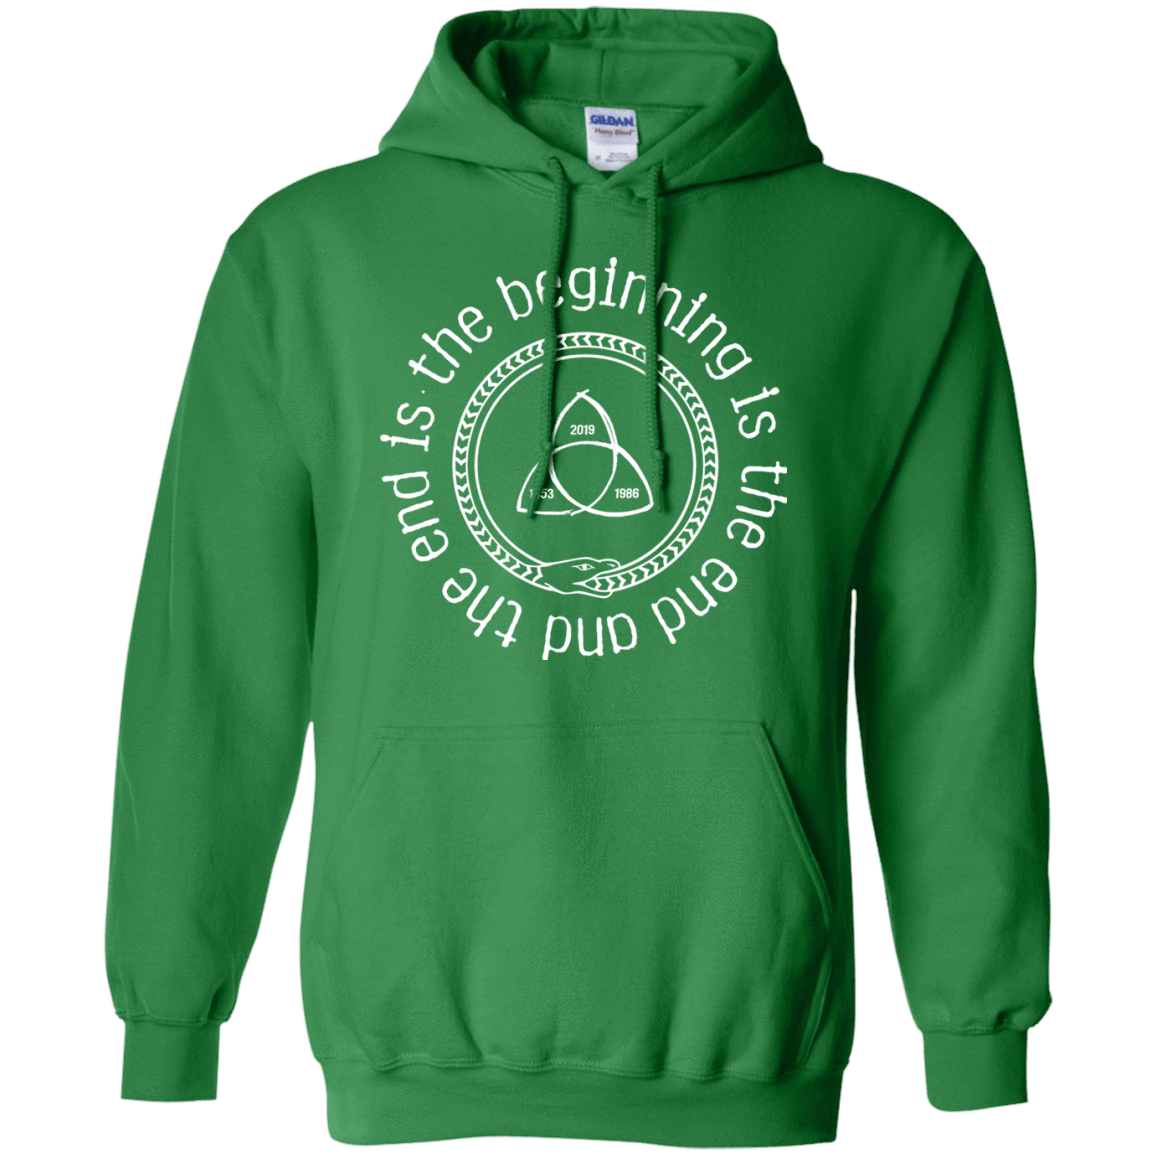 Sweatshirts Irish Green / Small Snake Pullover Hoodie